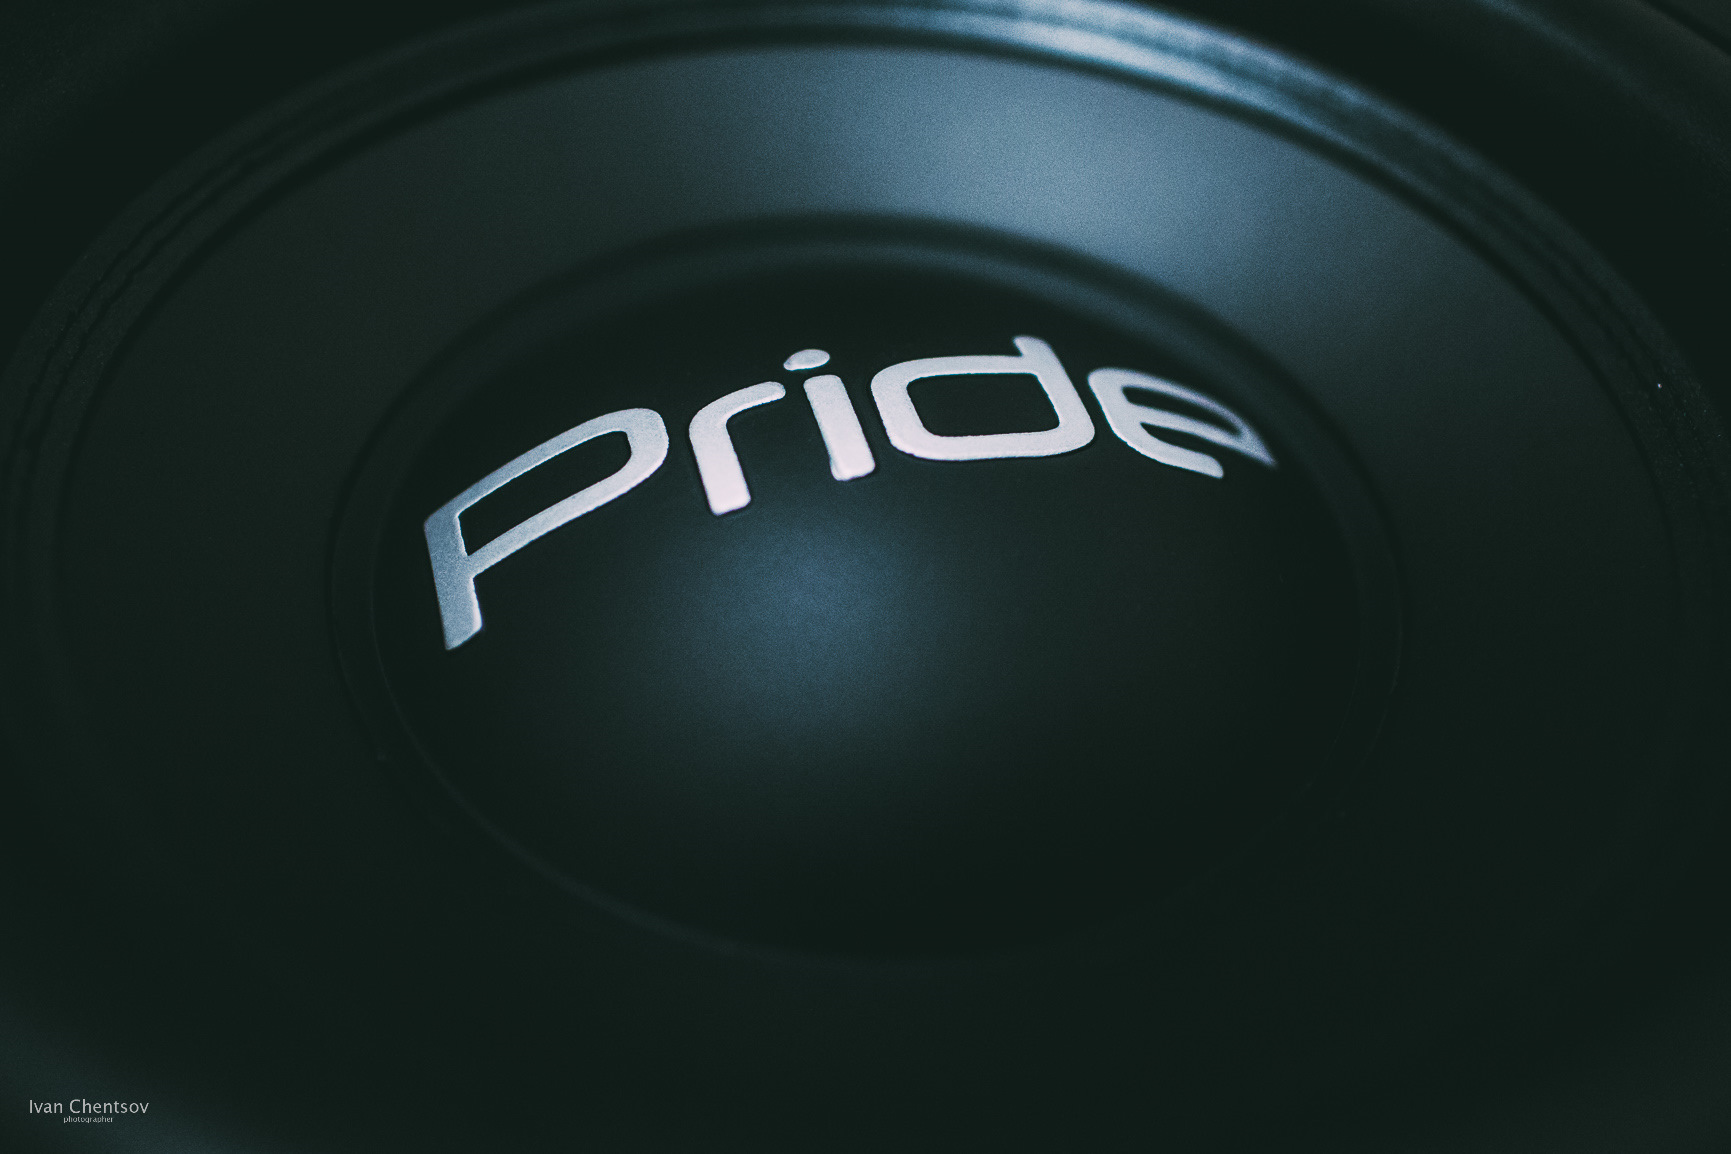 Прайд нальчик номер телефона. Pride car Audio сабвуфер. Динамик логотип Pride. Эмблема Pride car Audio. Прайд колонки в черном фоне.